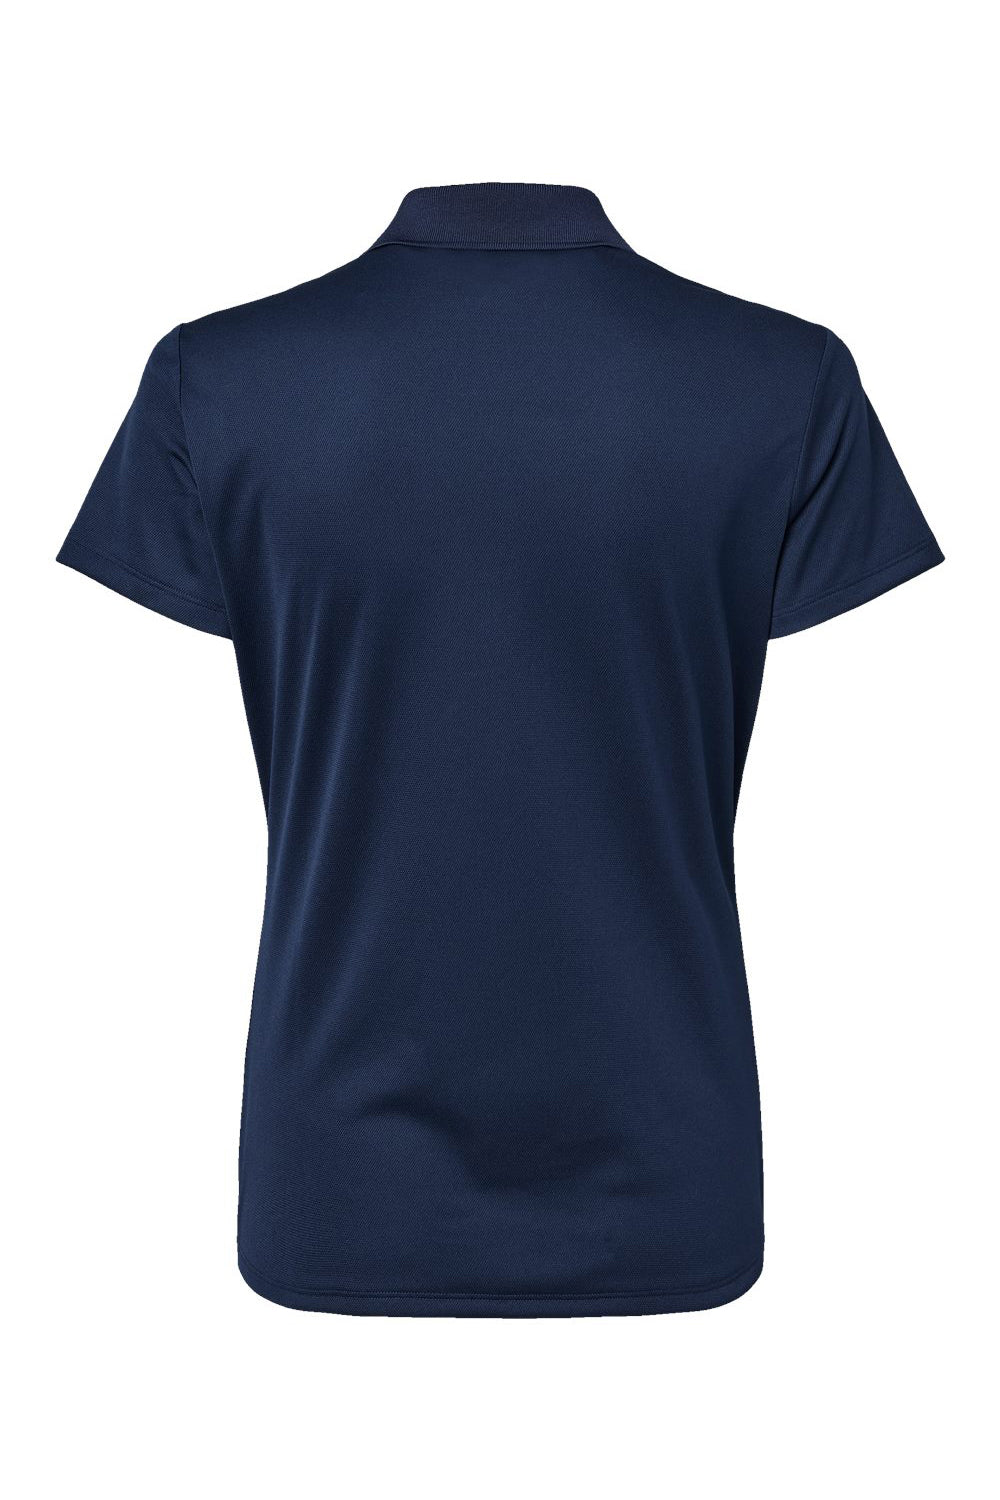 Adidas A431 Womens Basic Short Sleeve Polo Shirt Collegiate Navy Blue Flat Back